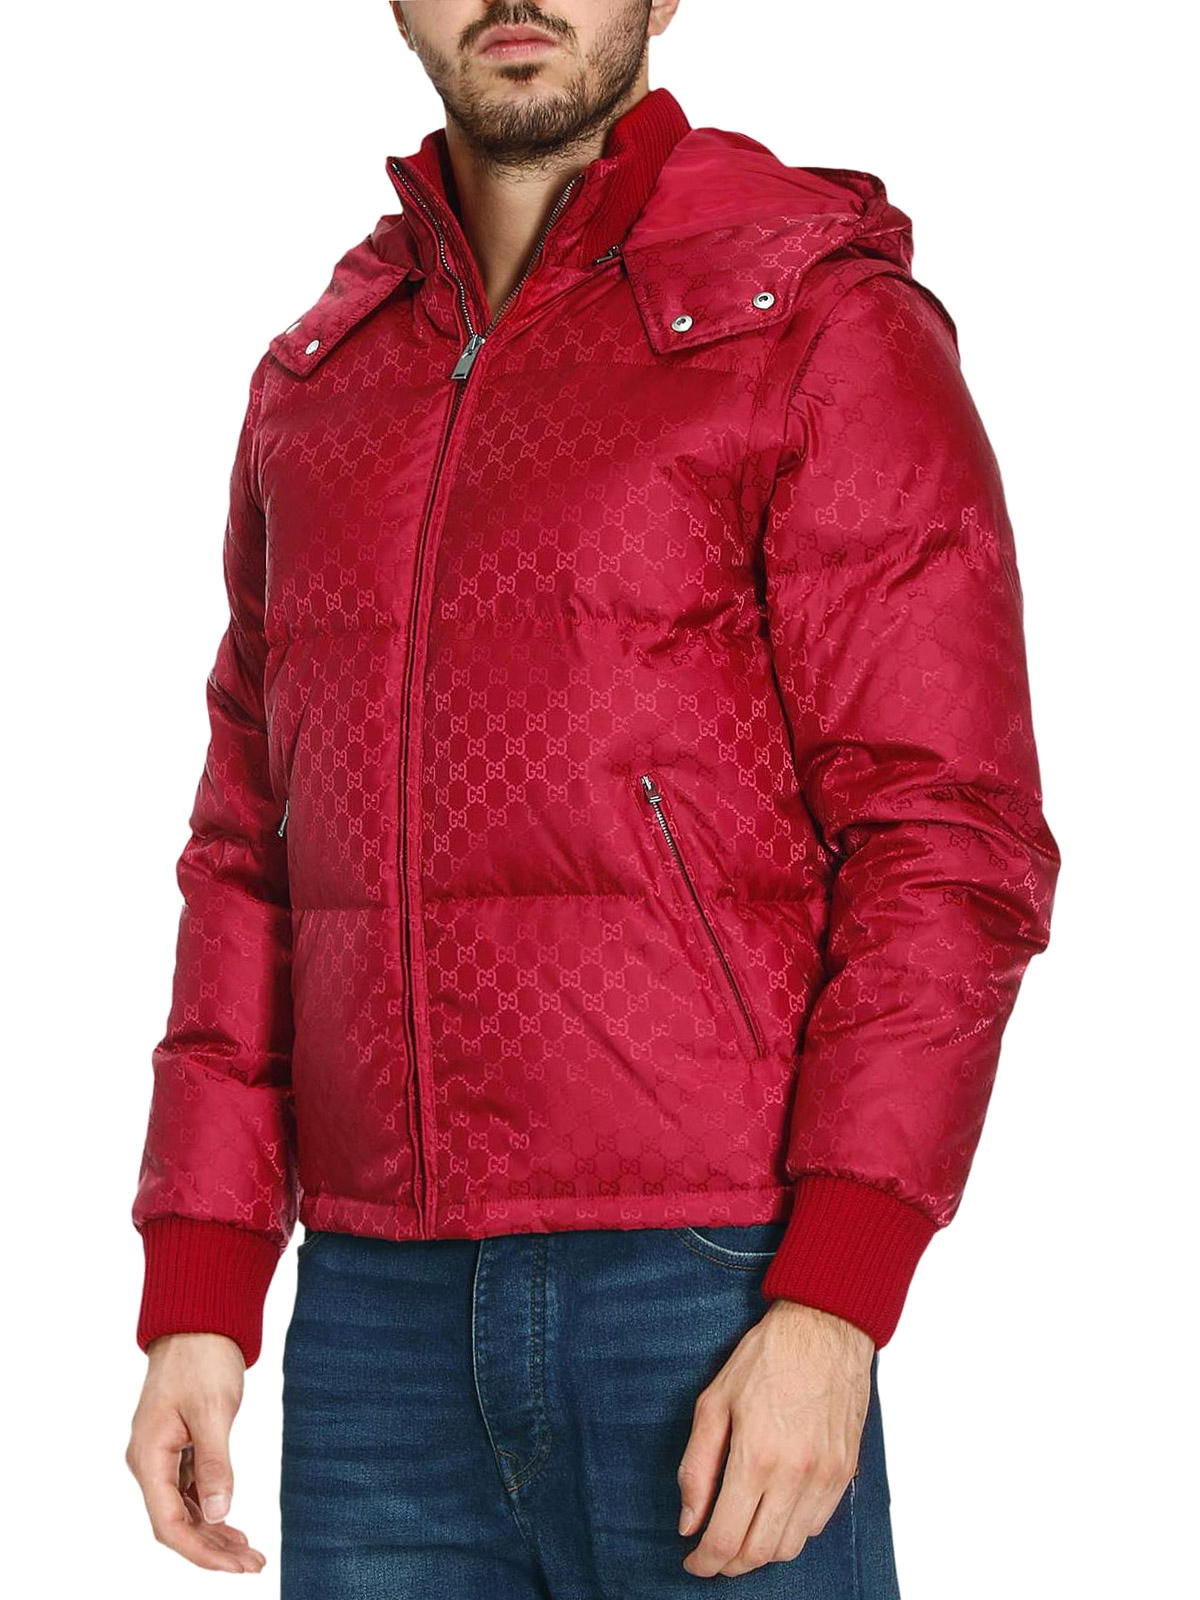 GG jacquard red nylon puffer jacket 